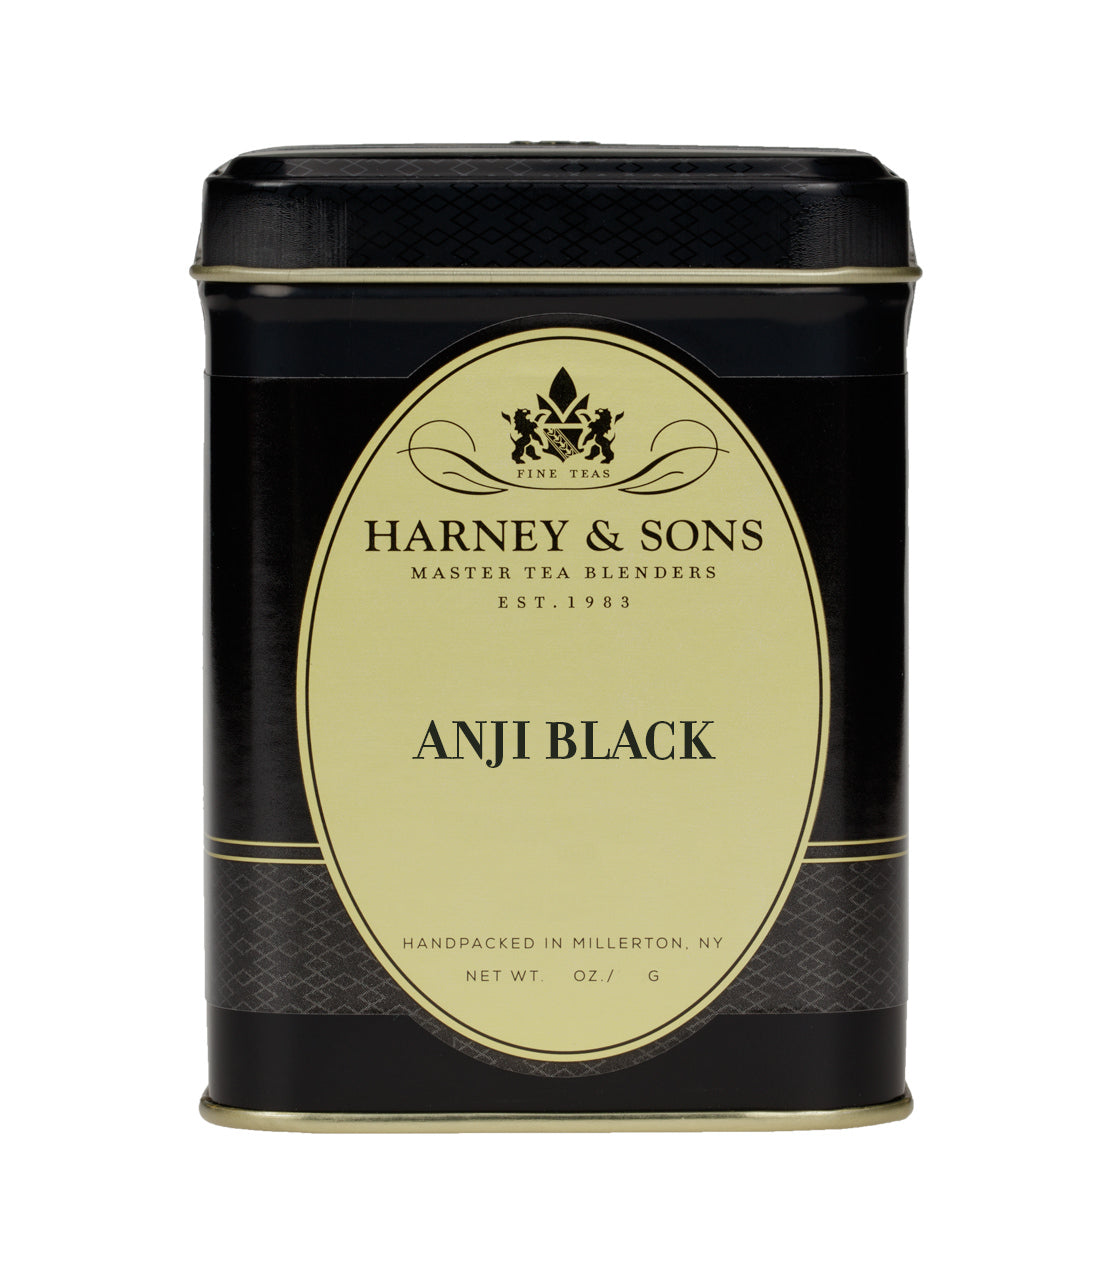 Anji Black - Loose 2 oz. Tin - Harney & Sons Fine Teas